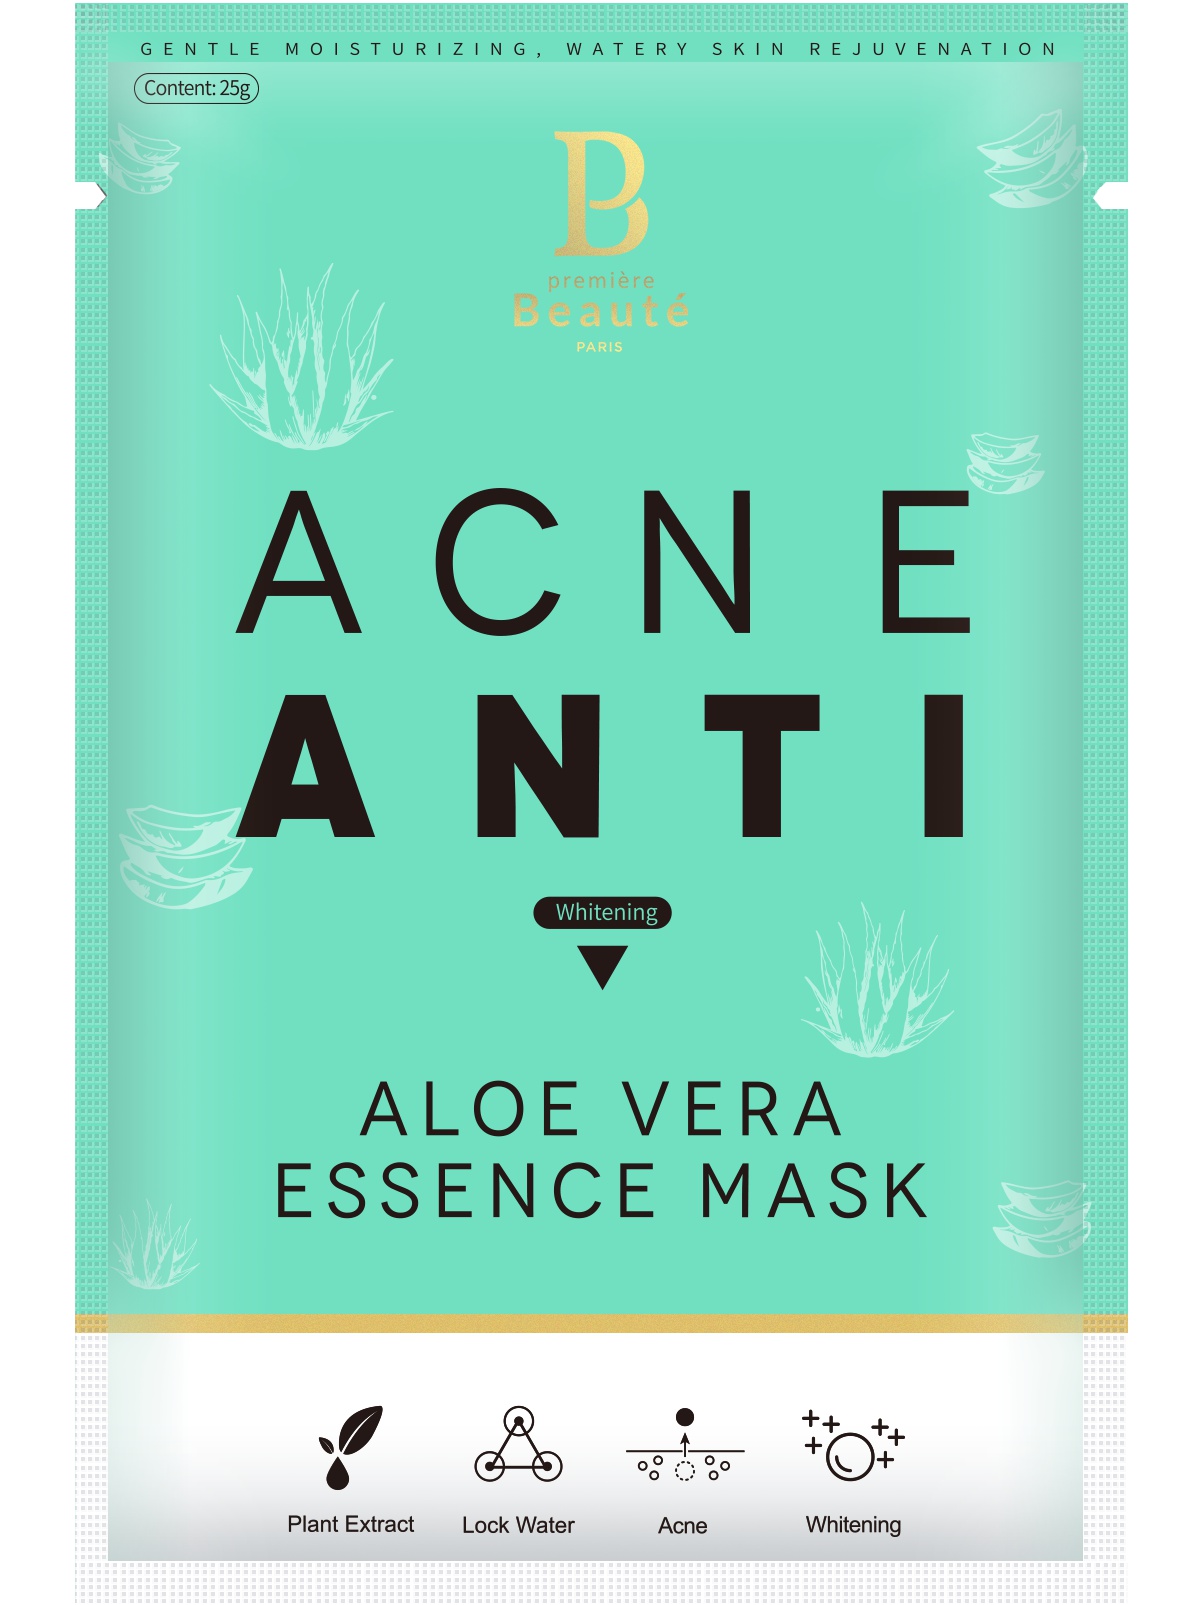 Premiere Beaute Acne Care Aloe Vera Essence Mask